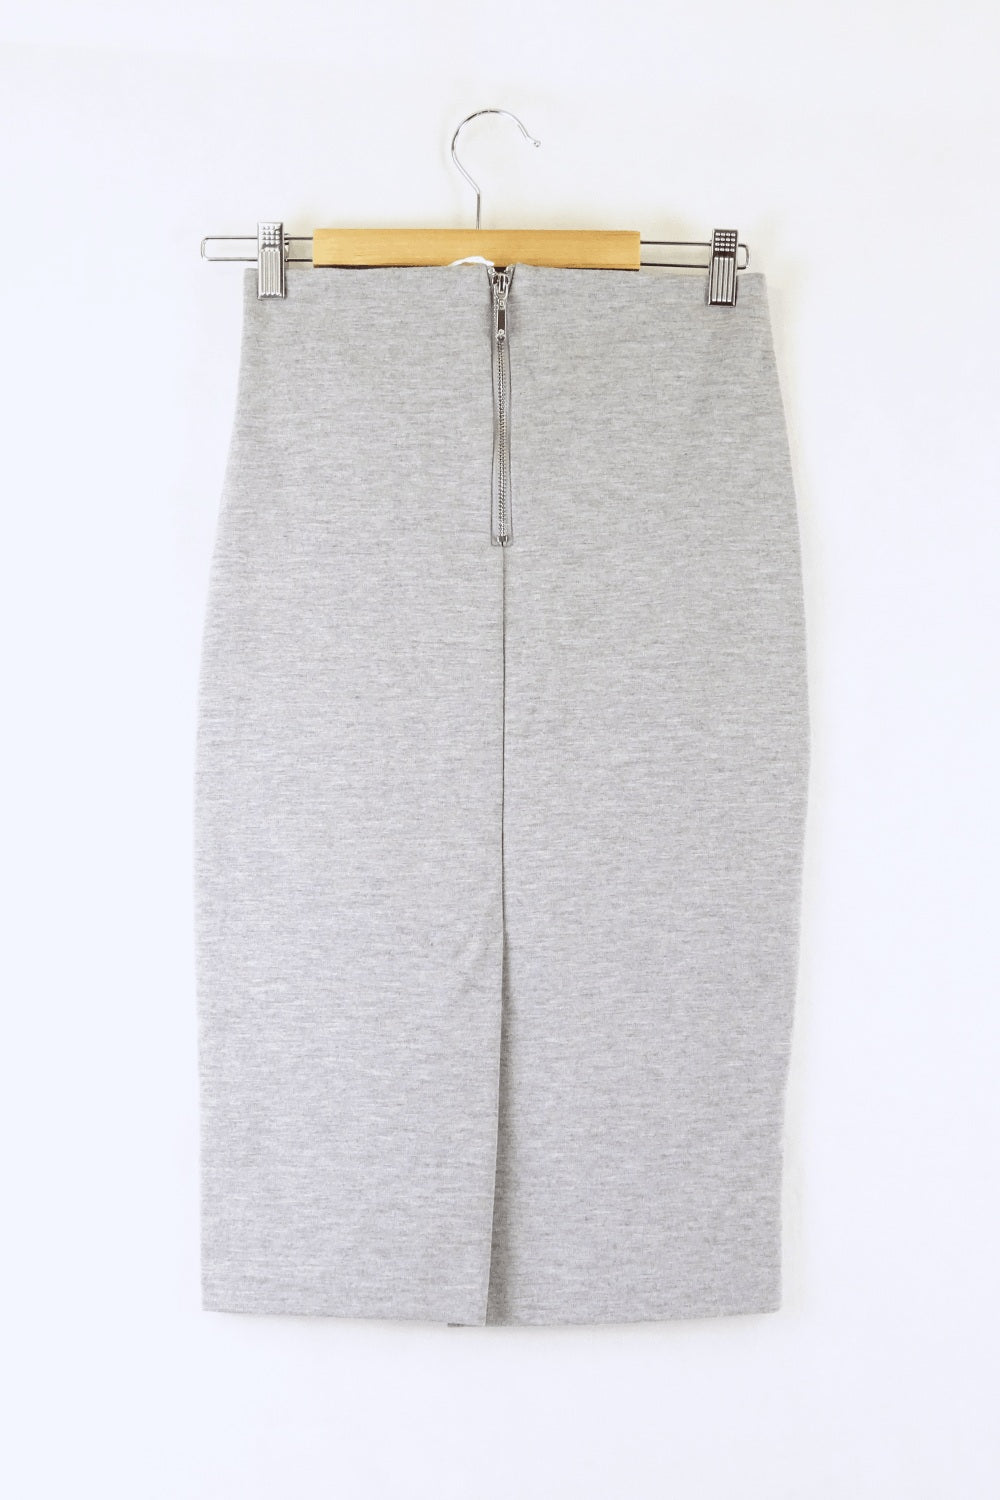 Reserved Grey Marle Pencil Skirt 36 (Au8)